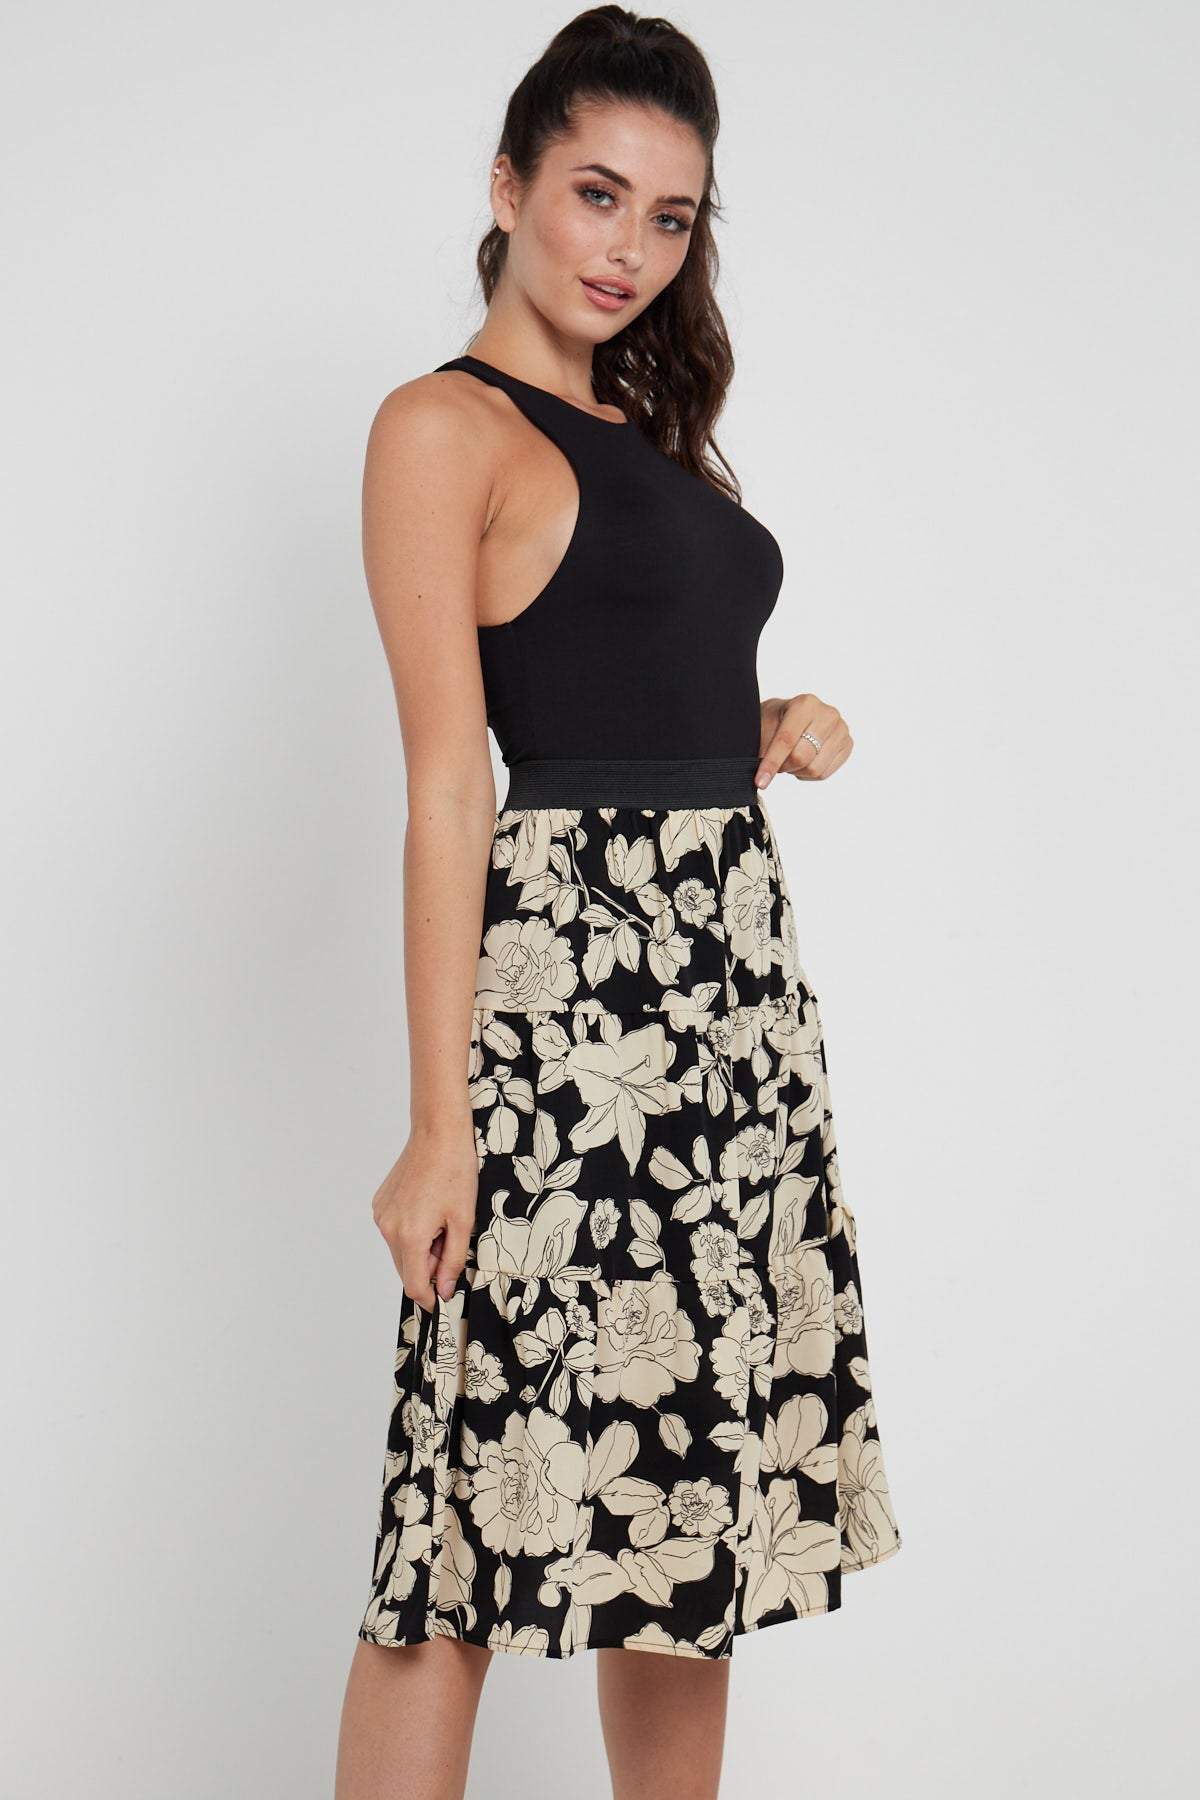 Love Sunshine Black Floral Printed Tiered Midi Skirt LS-2148 skirts